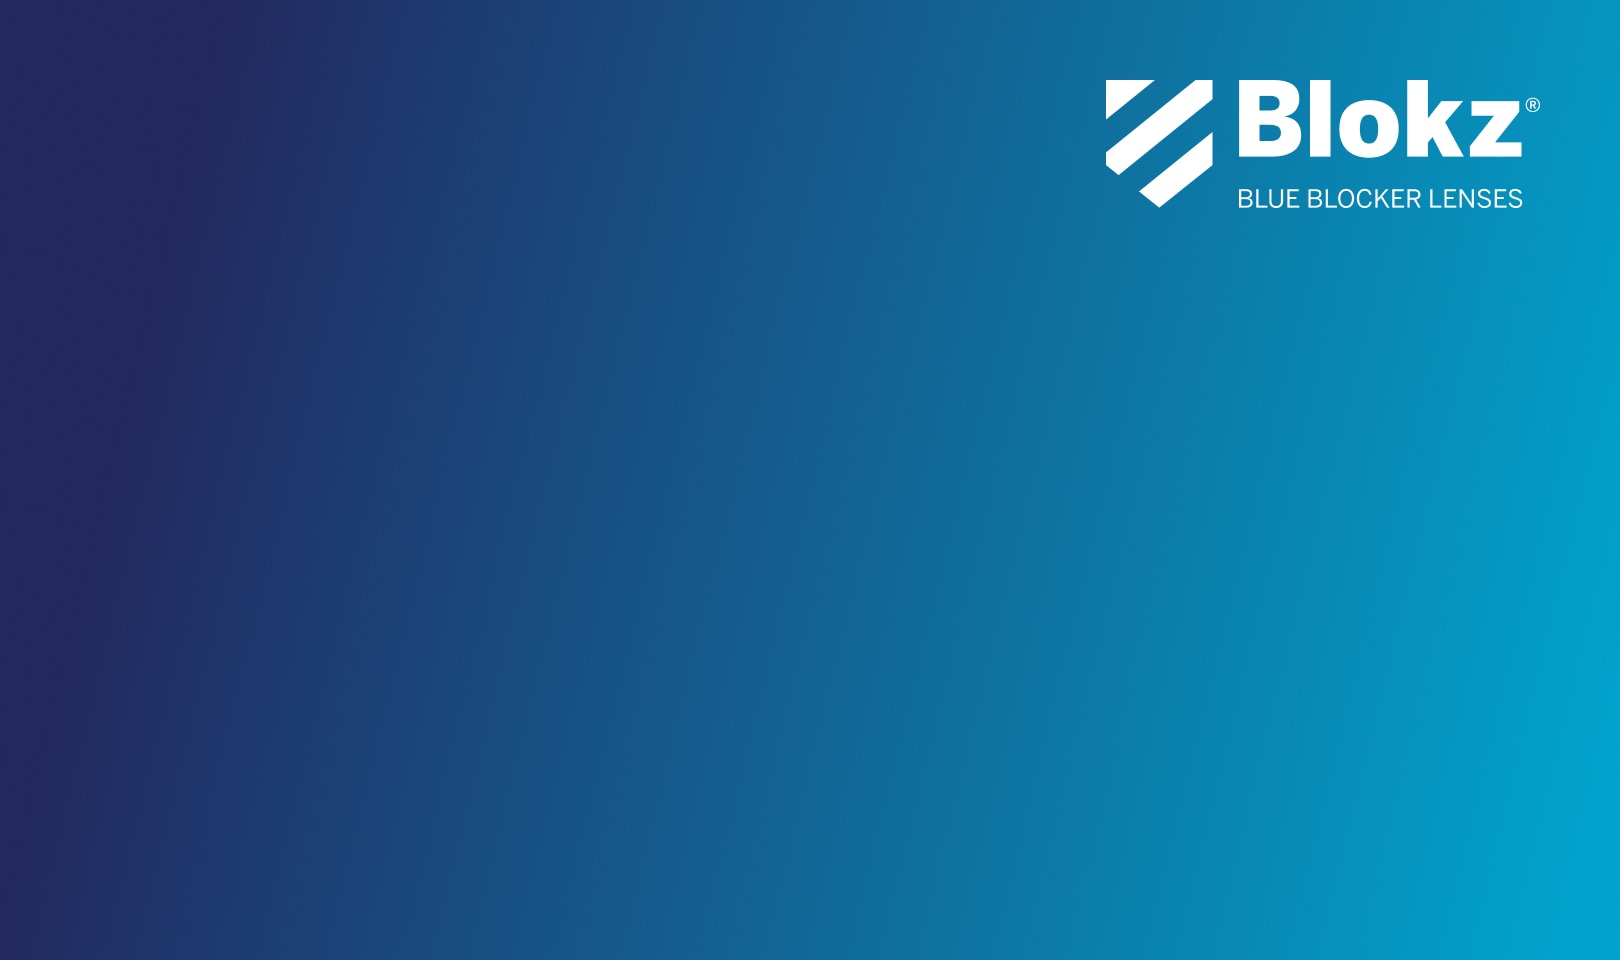 Image of an icon for Blokz, blue-blocker lenses, against a blue background.